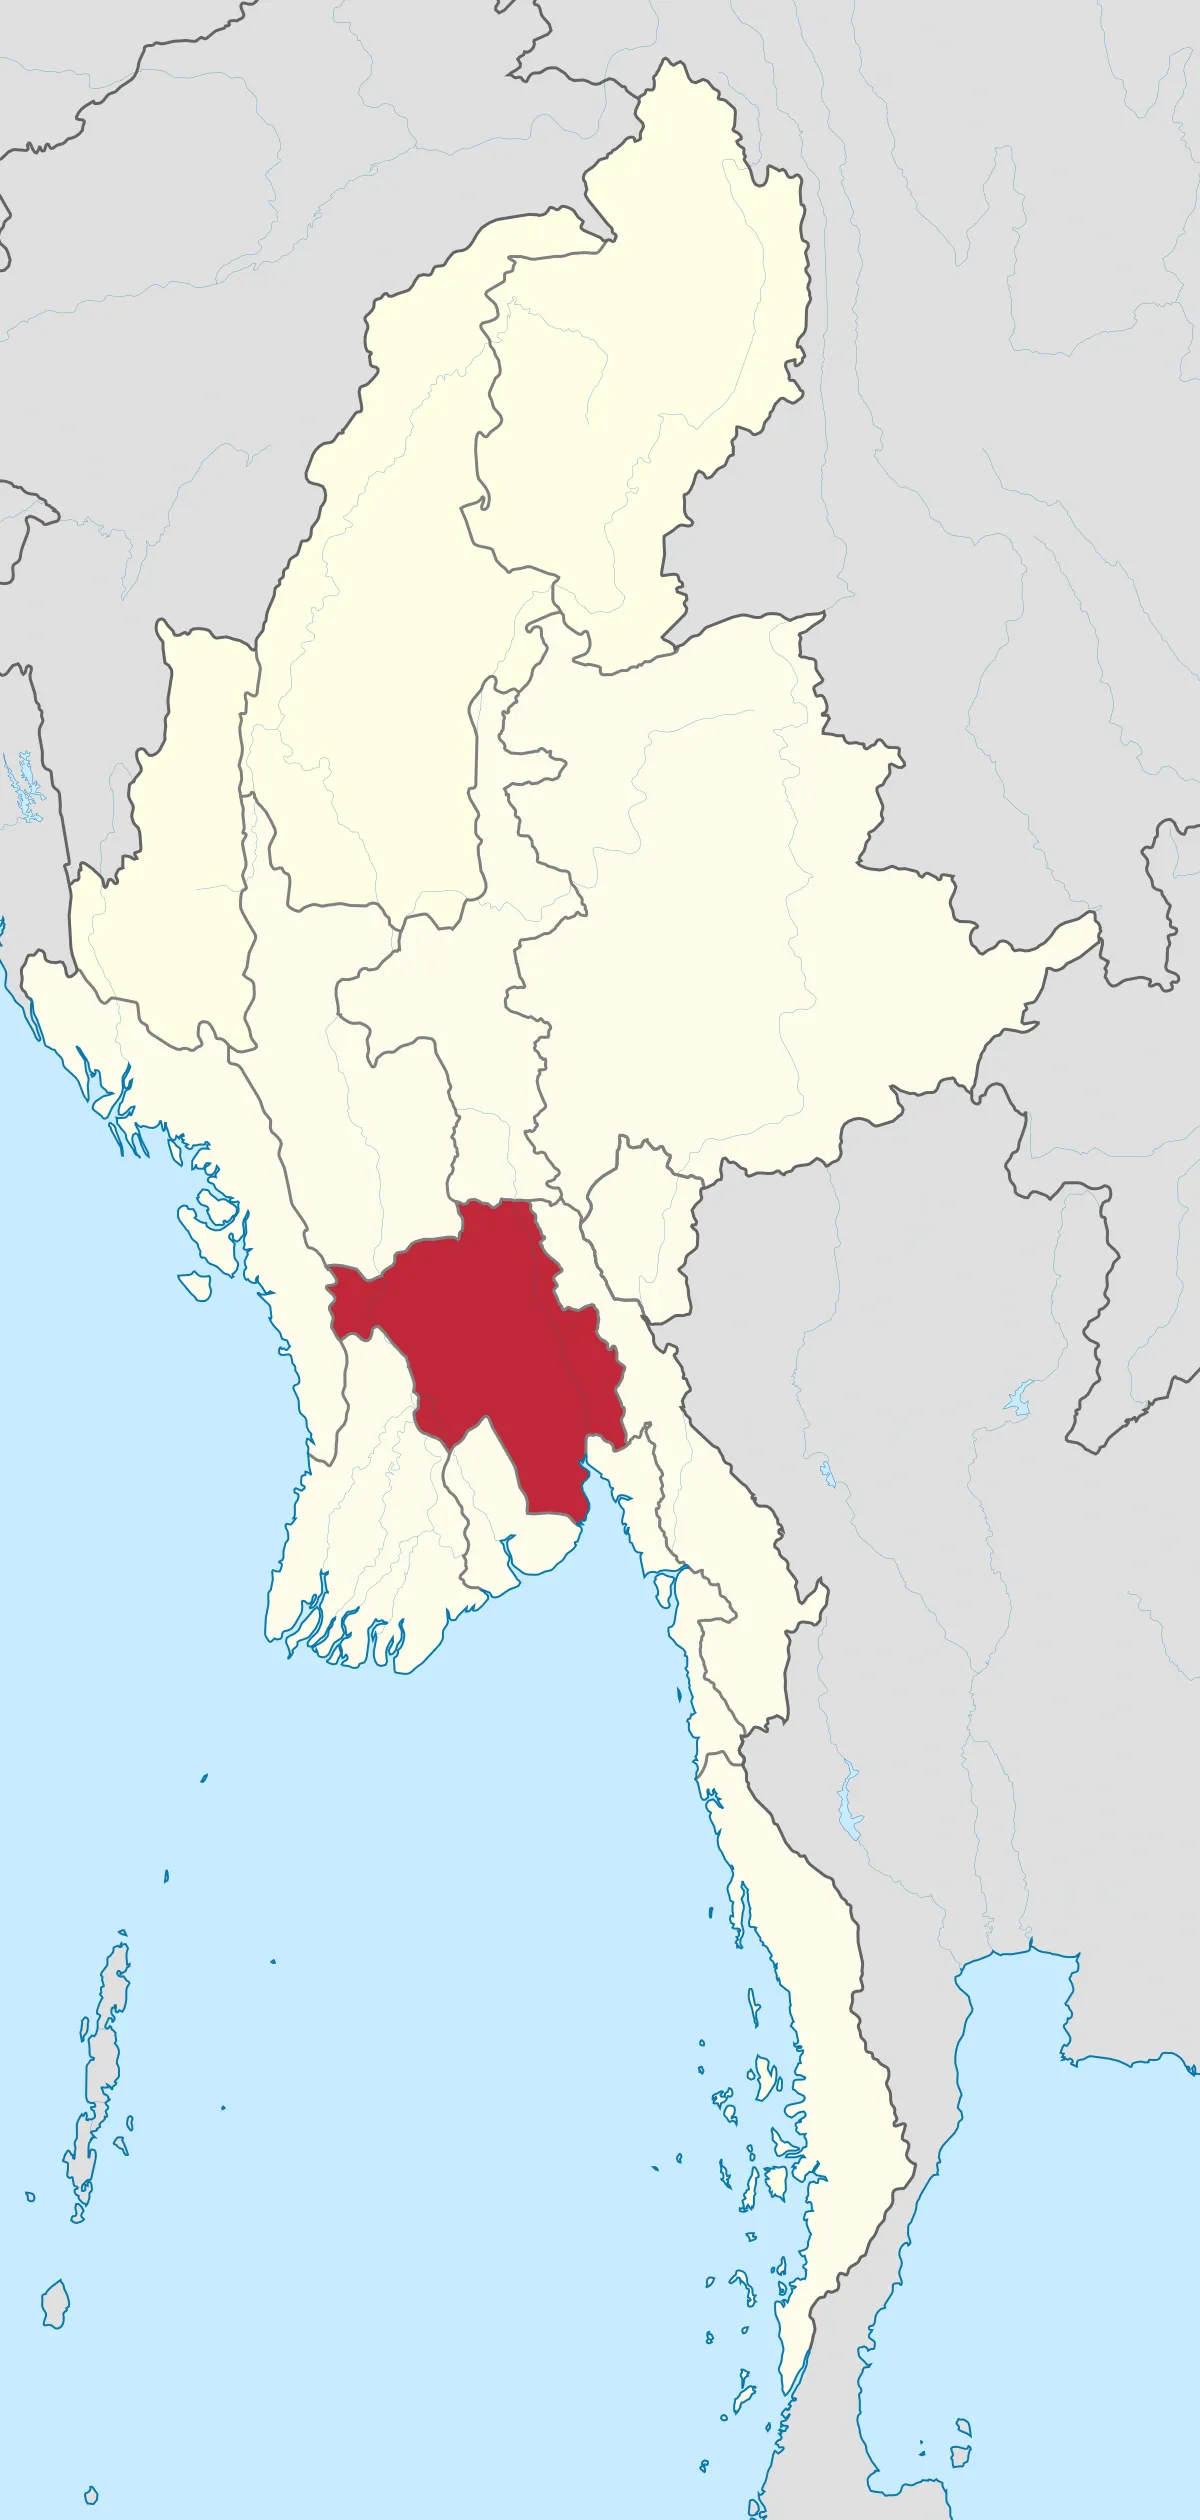 Location of Bago Region in Myanmar - image